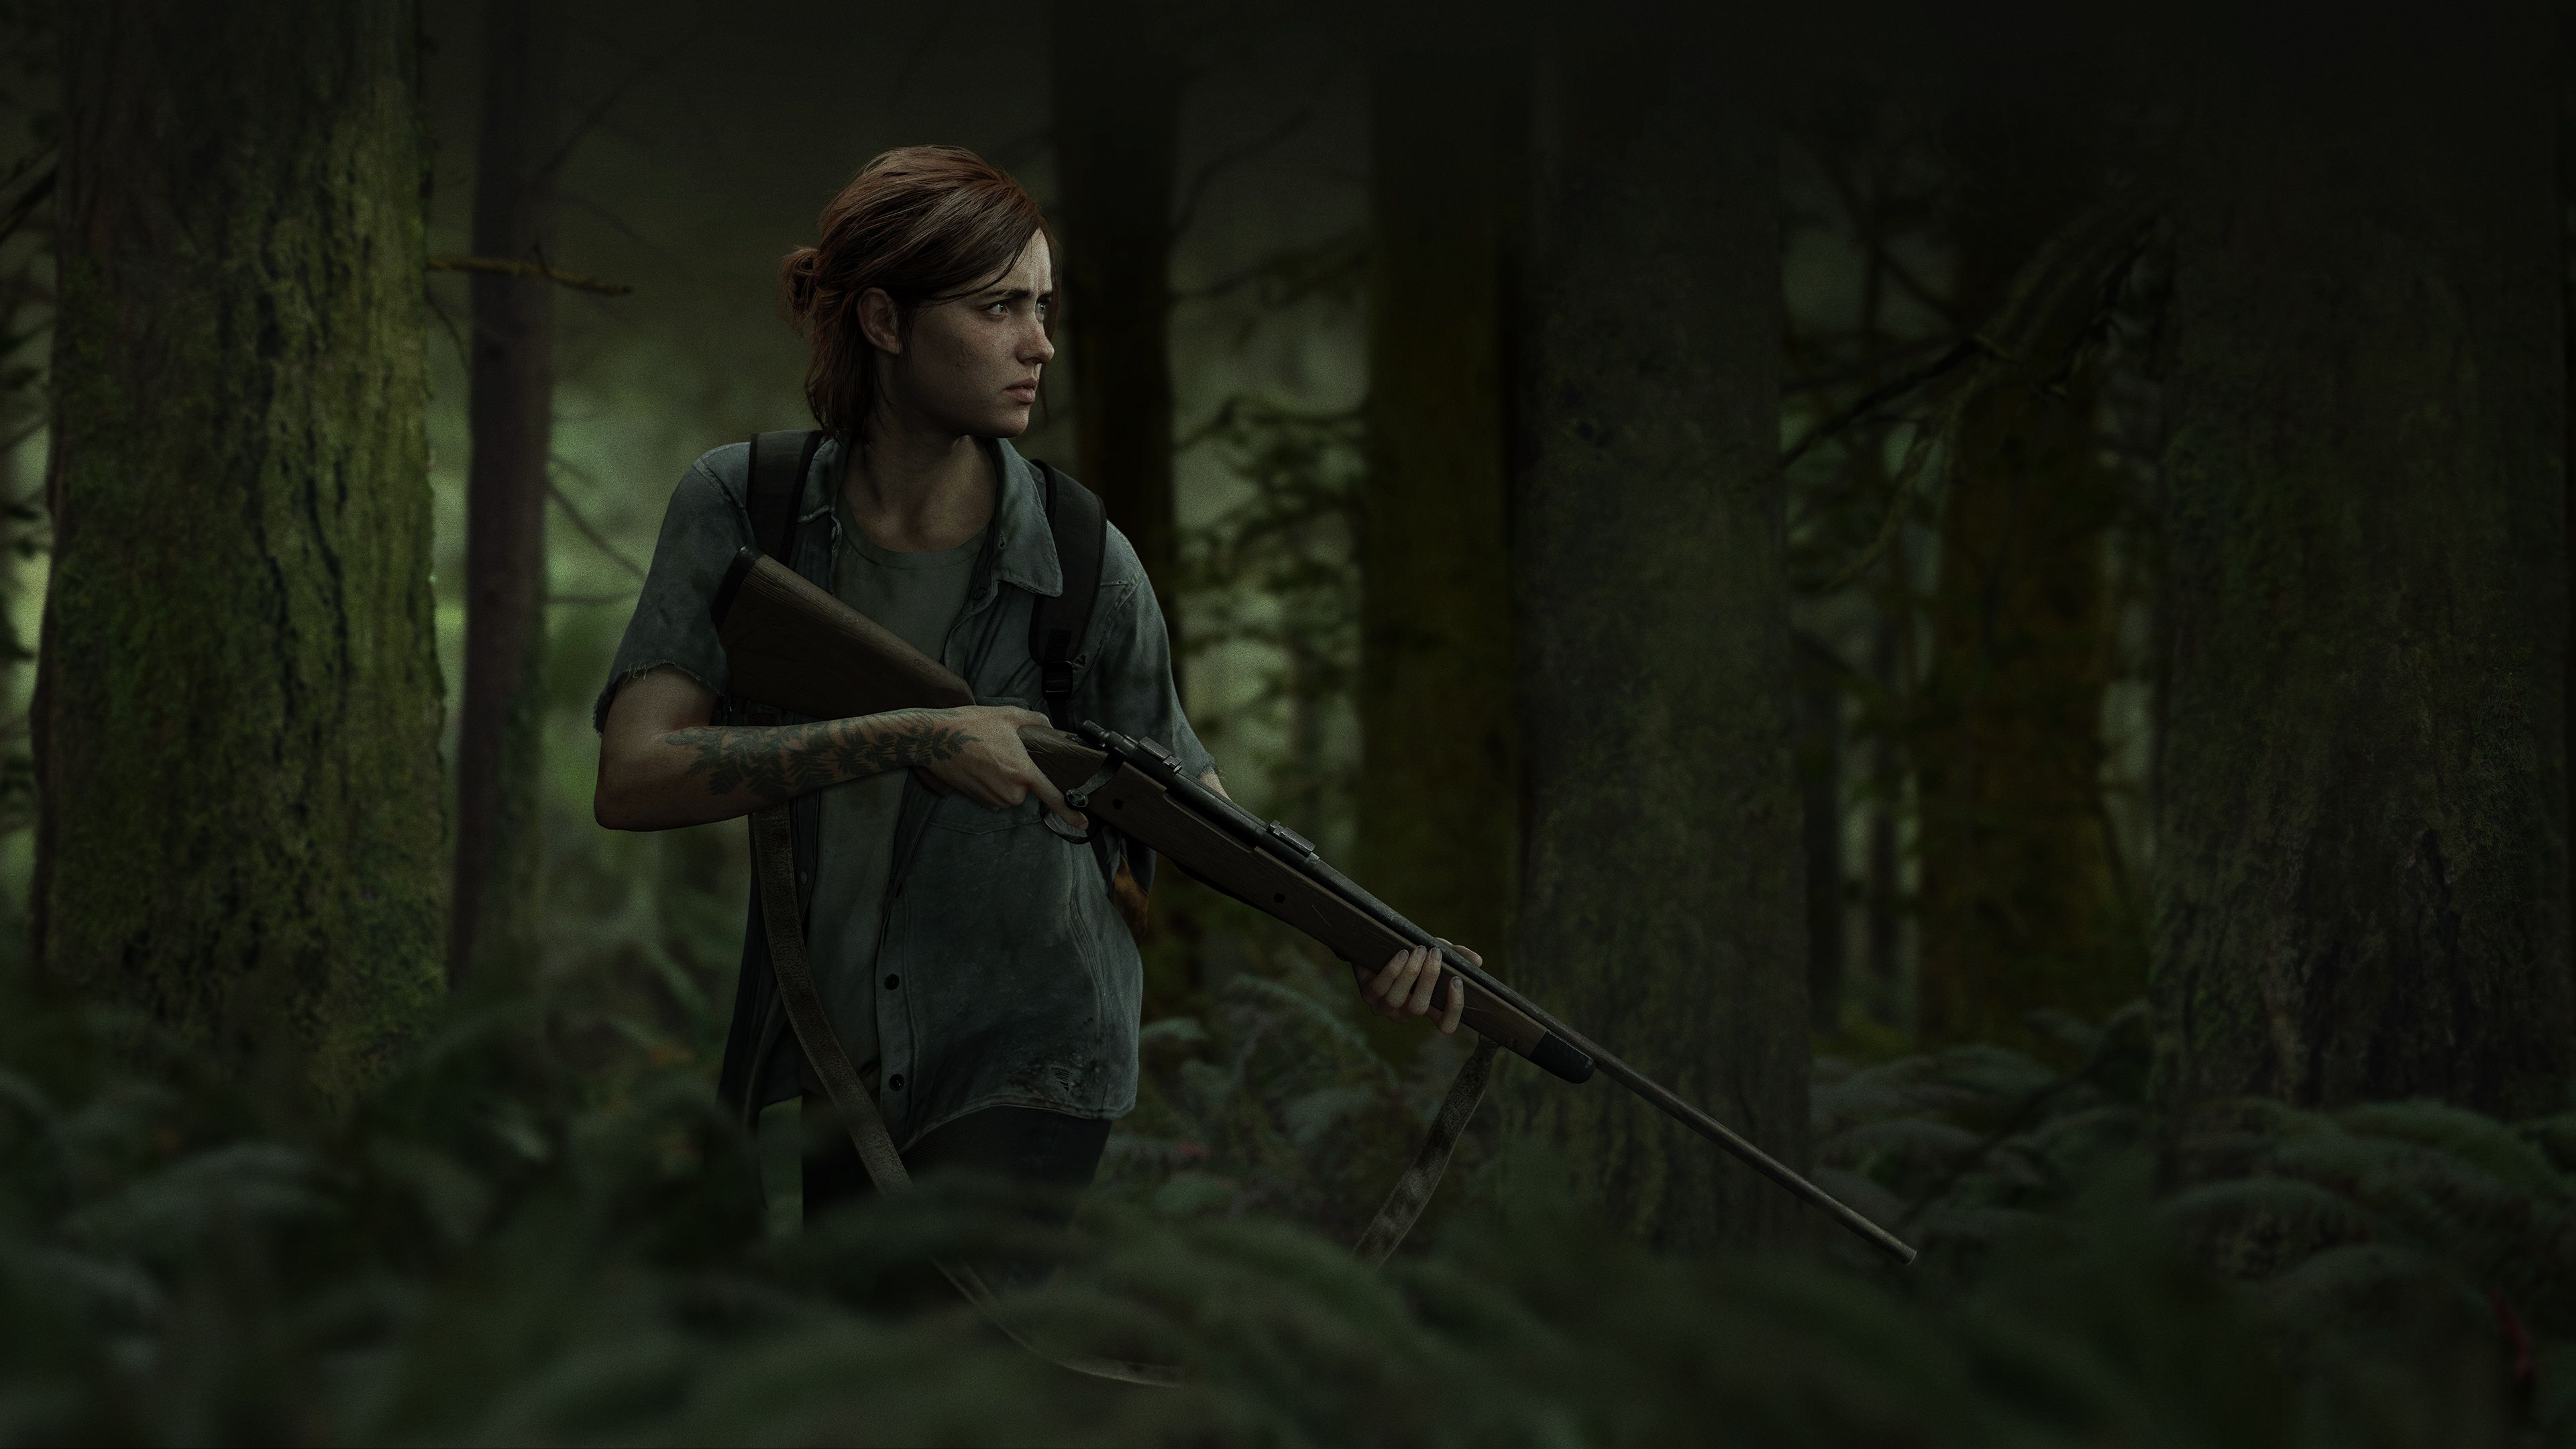 The Last of Us Part II 4K Wallpaper, Ellie, PlayStation 2020 Games, Games